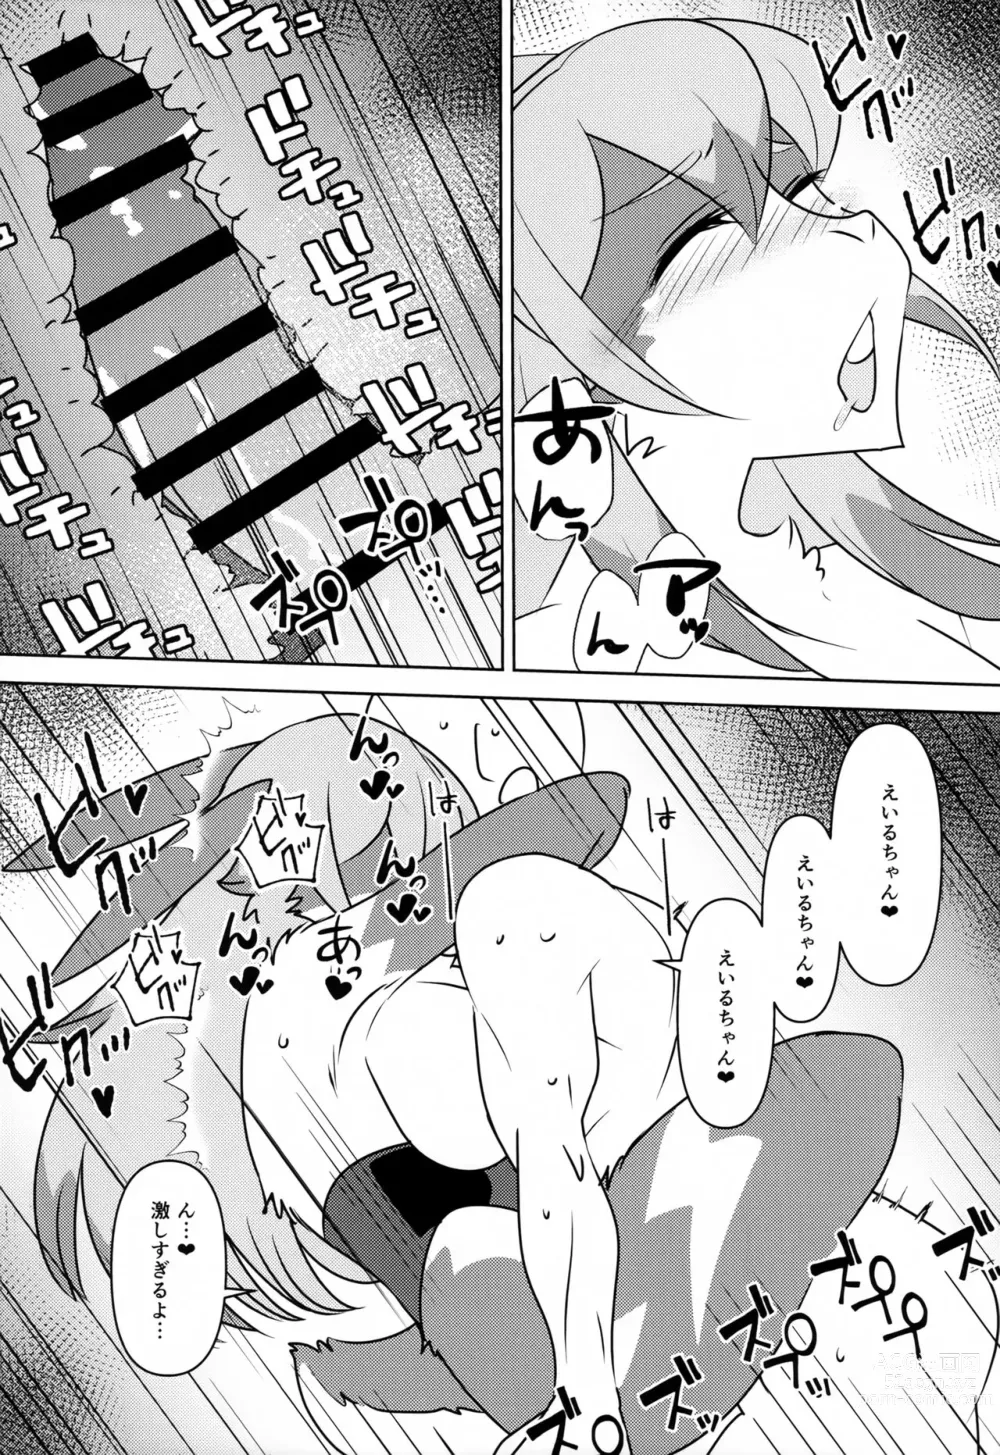 Page 9 of doujinshi Eiru-chan Kocchi Kocchi